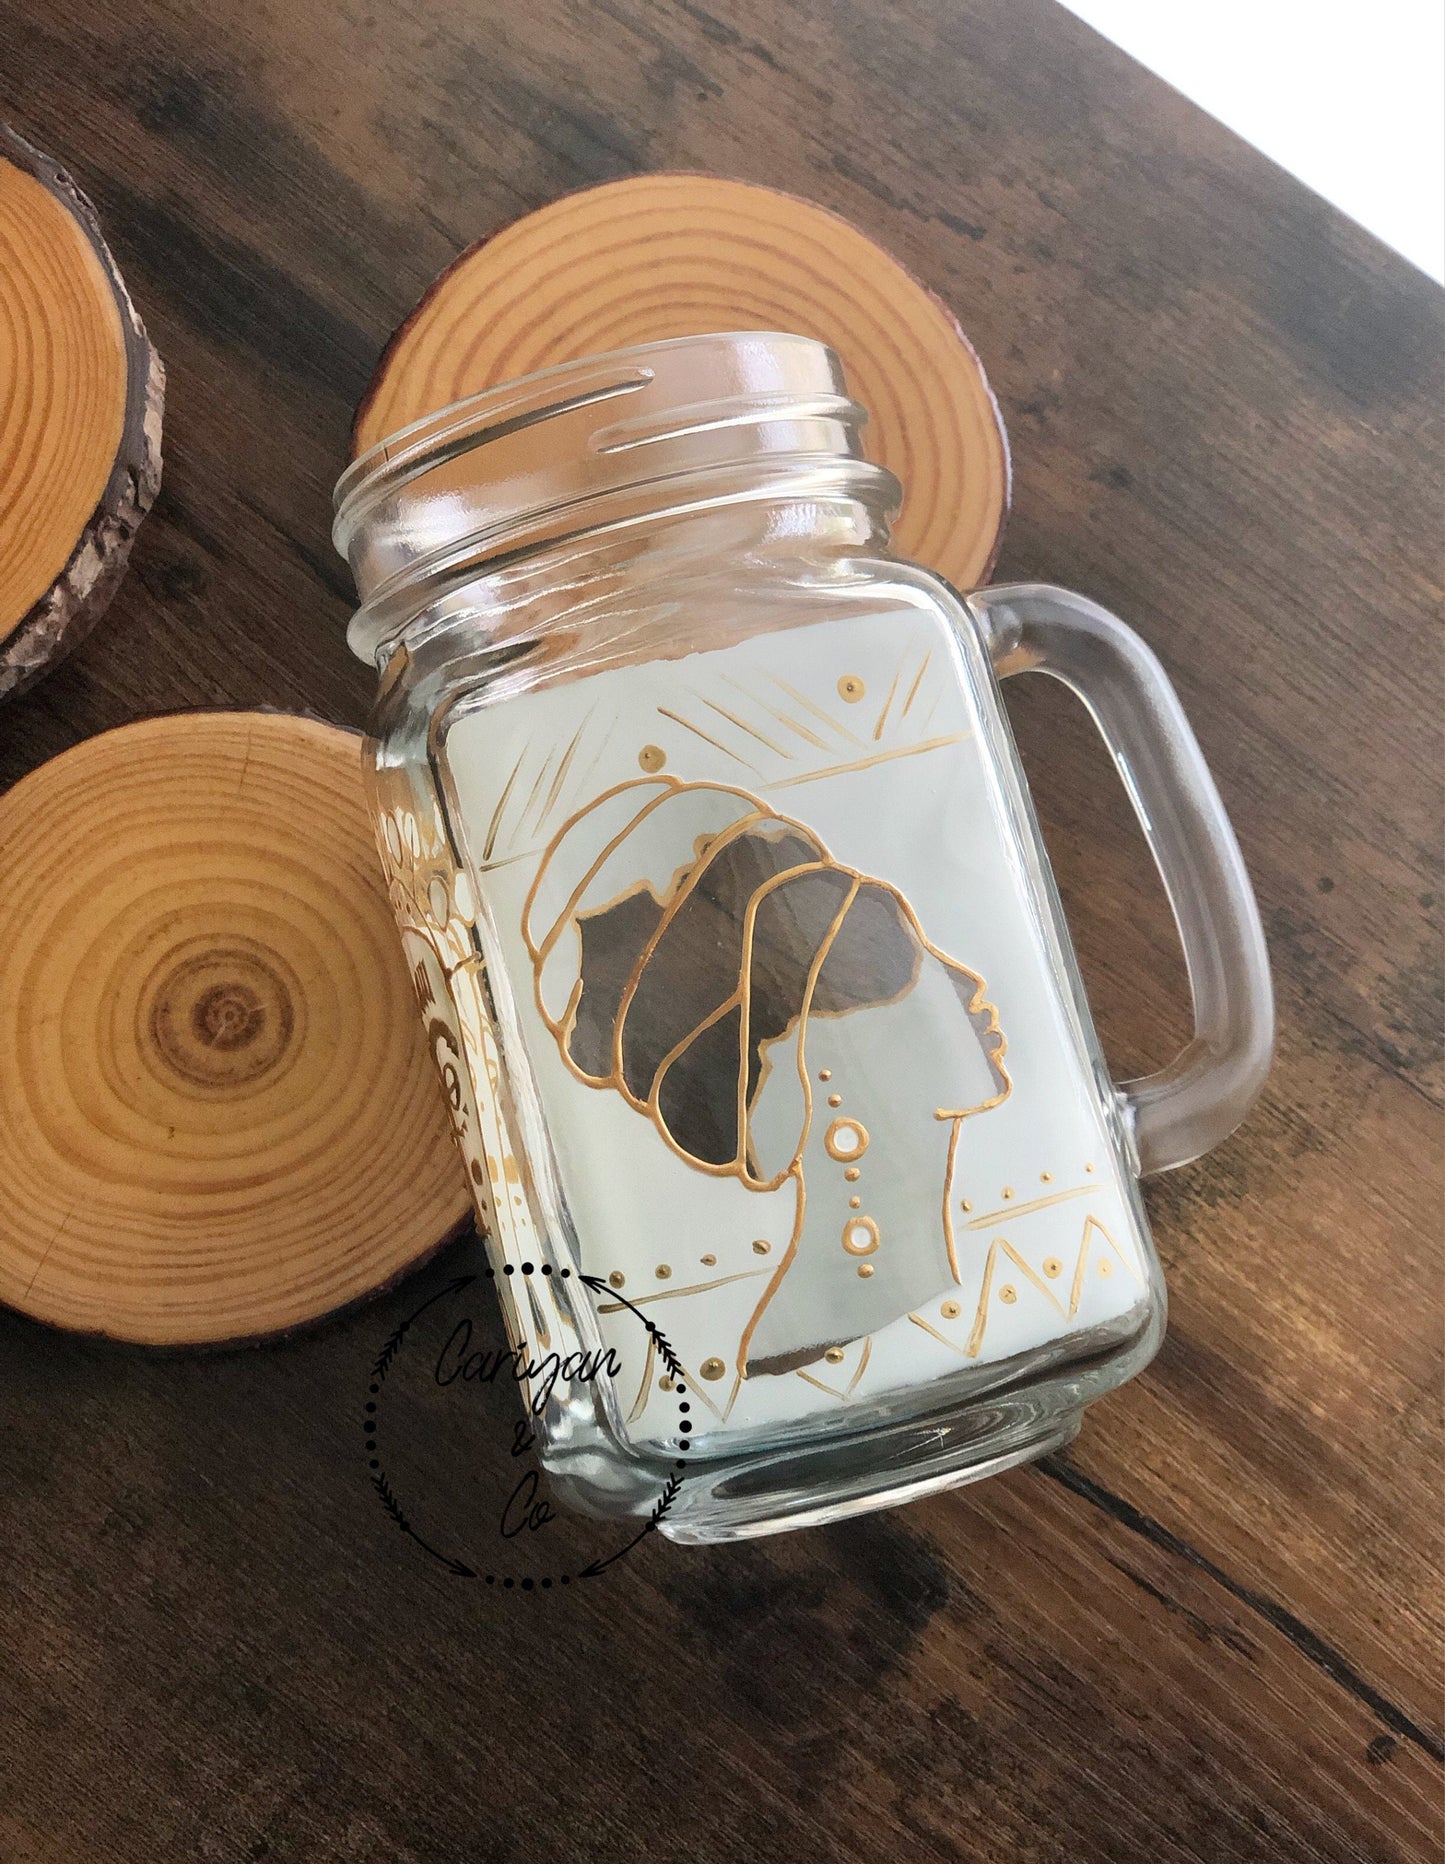 Africa Glass Coffee Mug, Iced Coffee Cup, Glass Cup, Travel Mug Cup, Hand Painted Glasses, Personal Mug Cup, Sun Coffee Mug